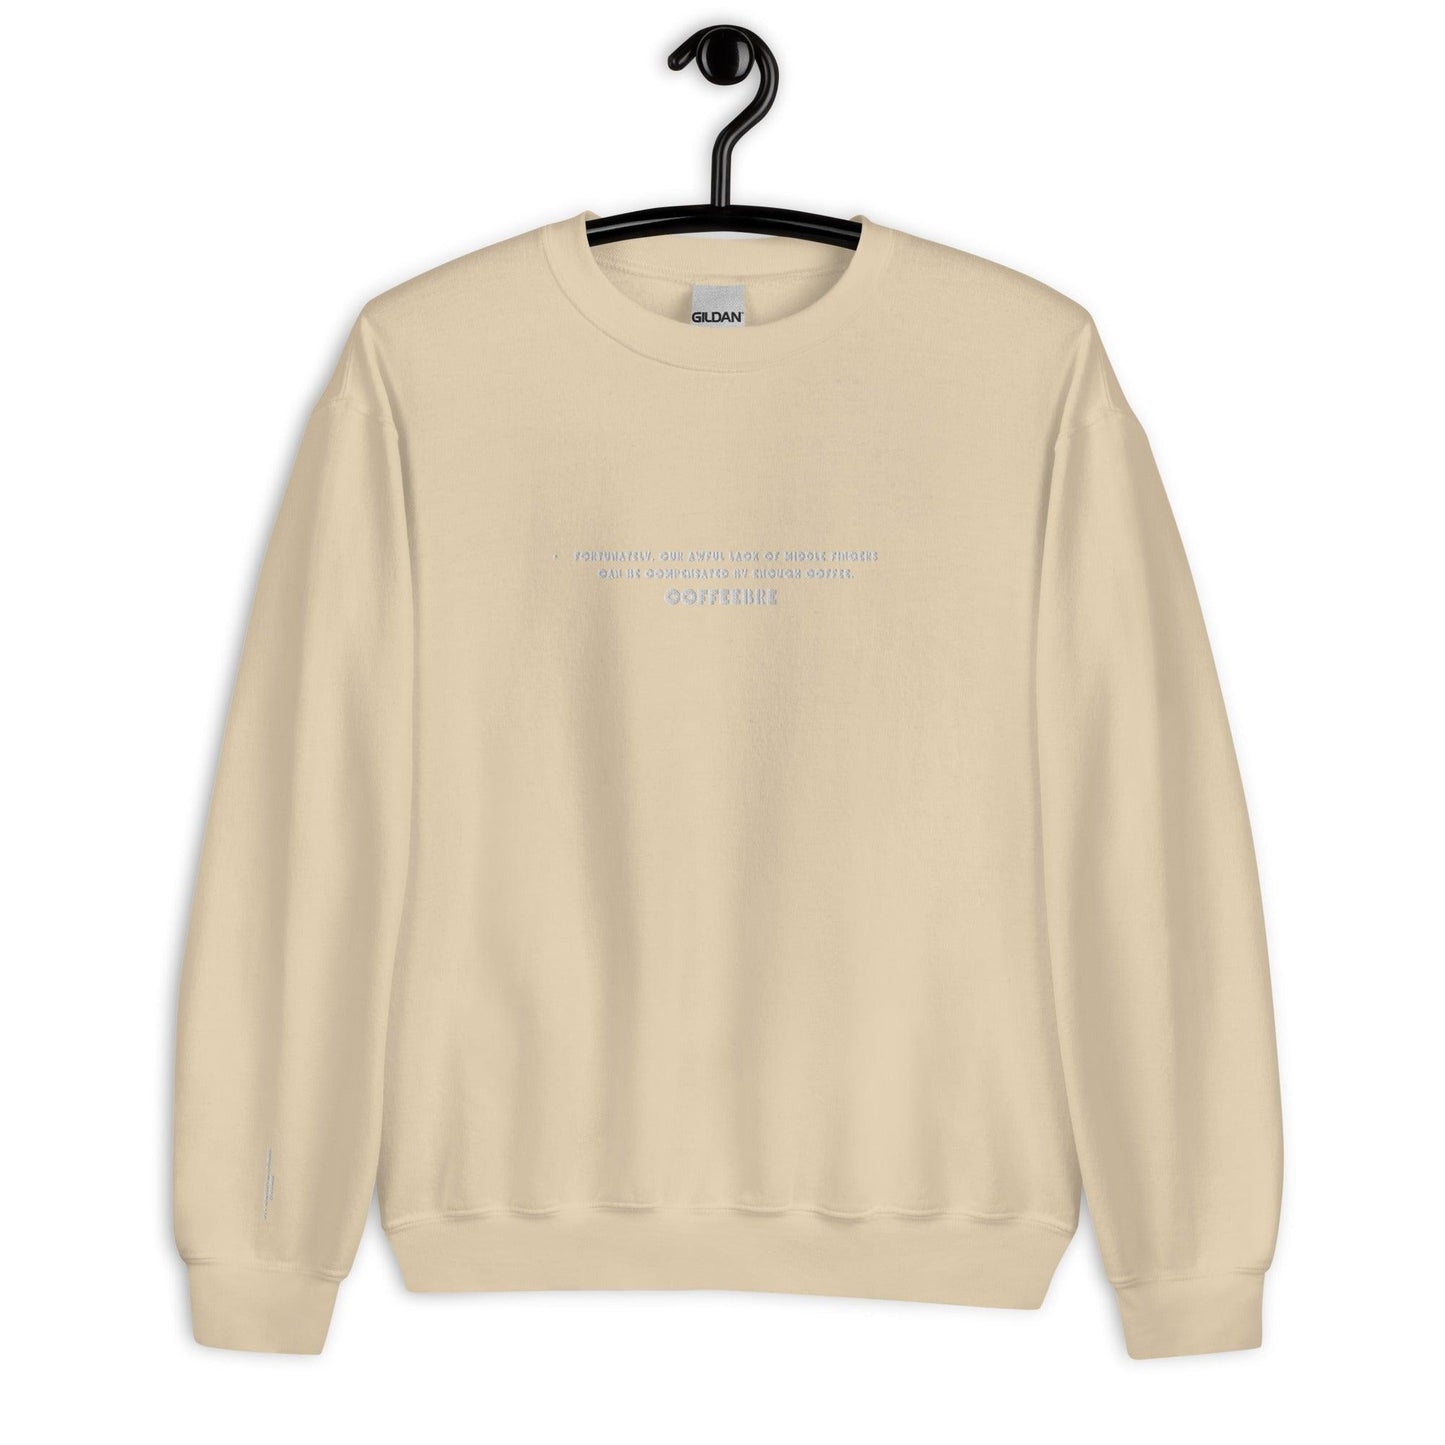 Embroidered Coffeebre Lifestyle Unisex Sweatshirt - COFFEEBRE